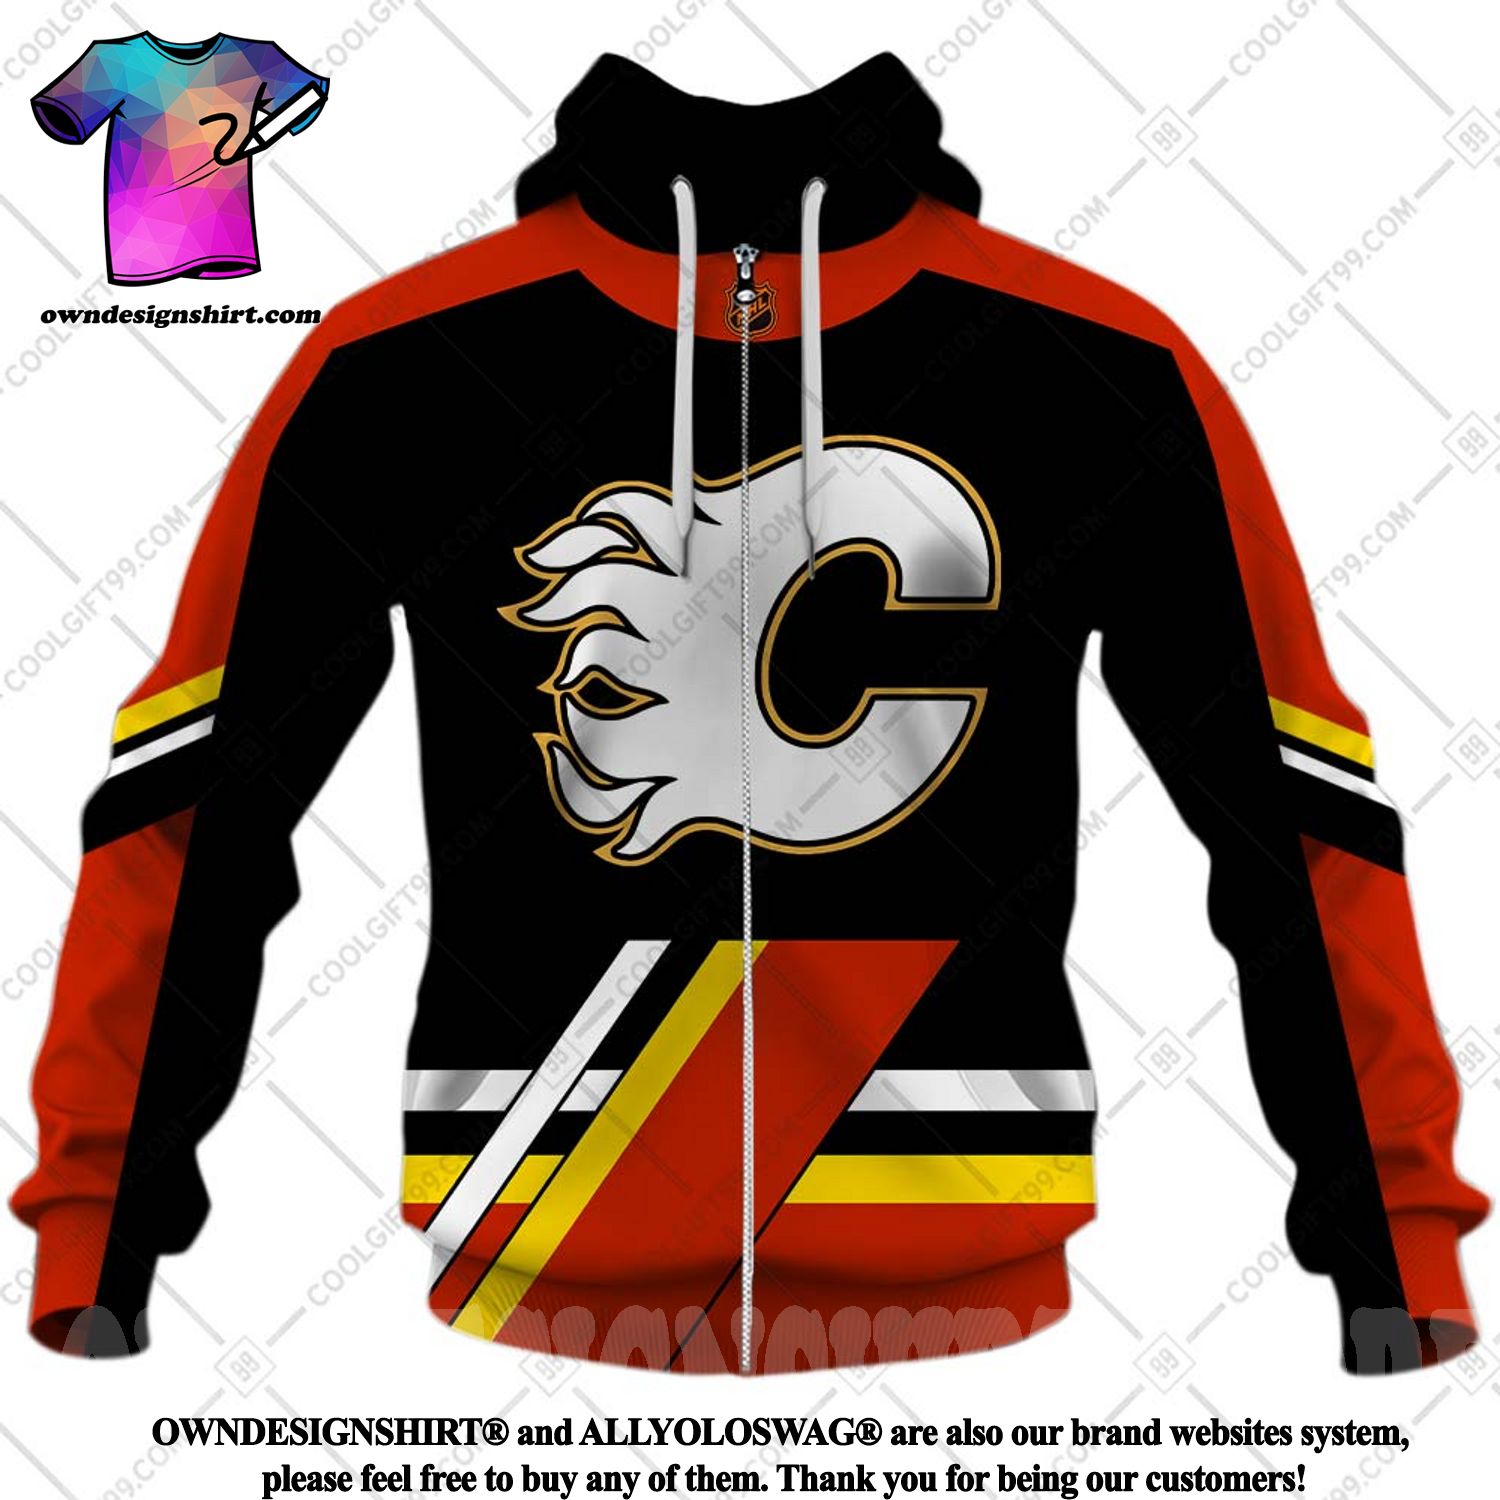 Calgary Flames Reverse Retro Jersey